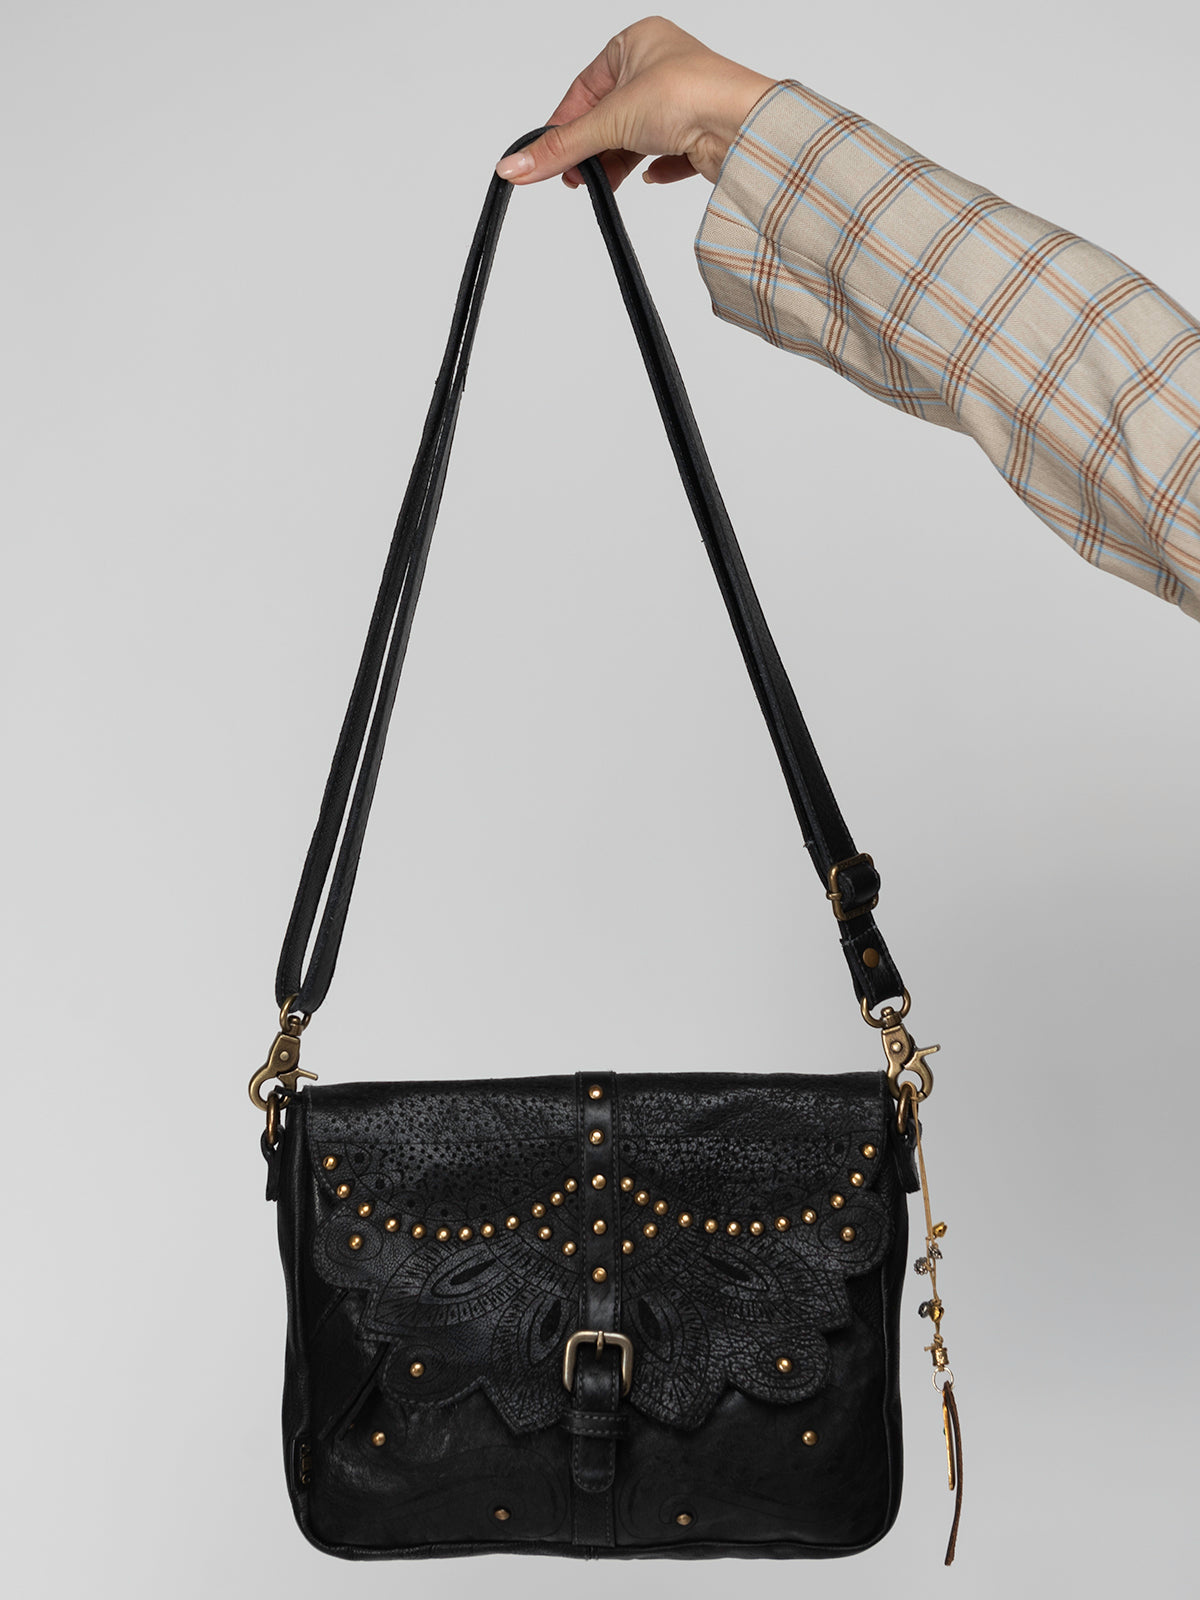 CAROB: Black leather crossbody bag by Art N Vintage